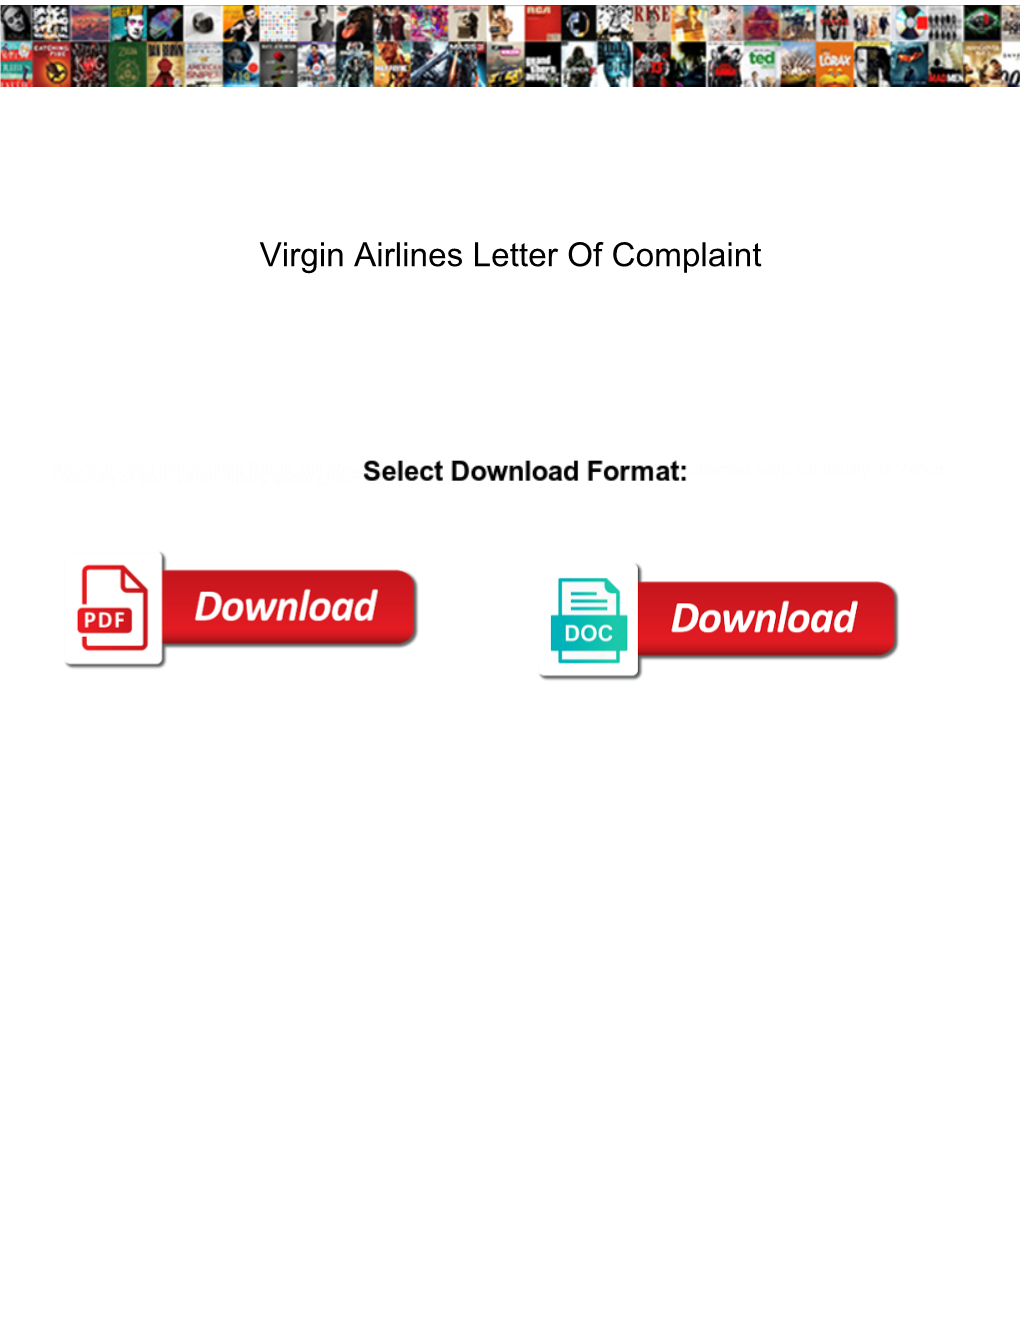 Virgin Airlines Letter of Complaint